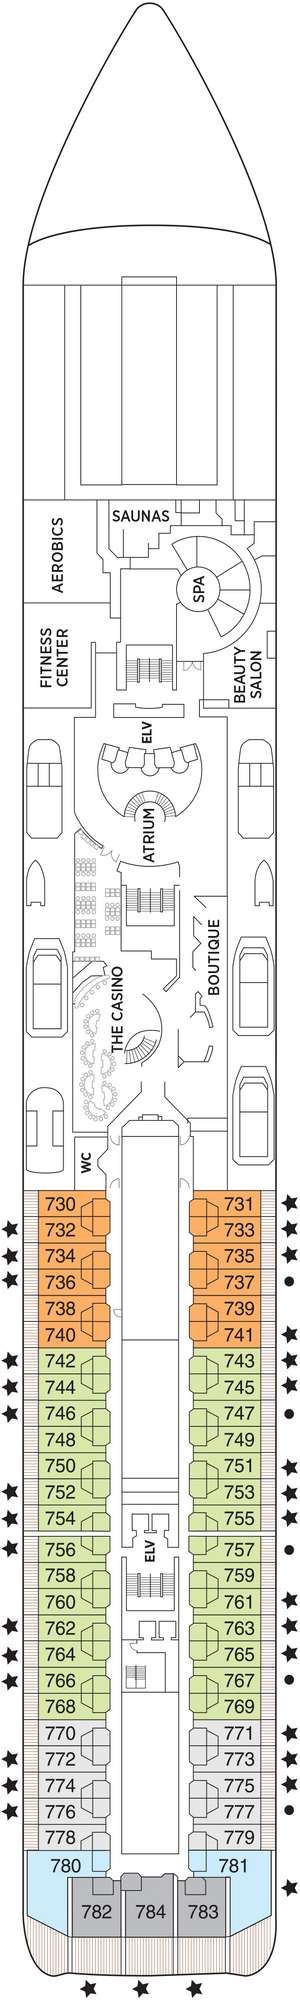 Deck plan for Regent Seven Seas Mariner